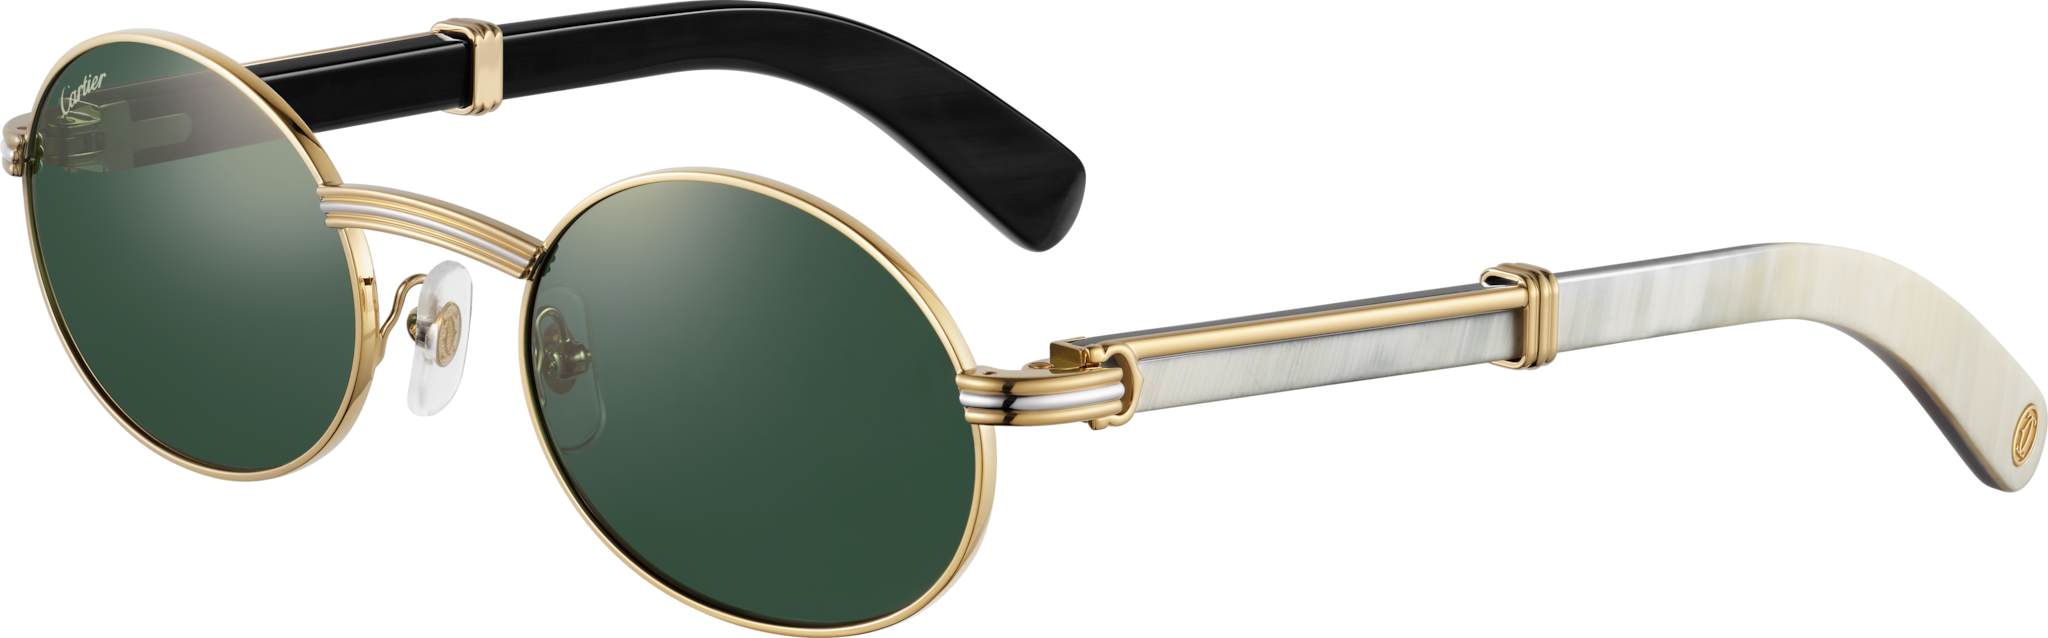 Première de Cartier Eyewear - SunglassesSmooth gold and platinum finish metal, white horn, grey lenses